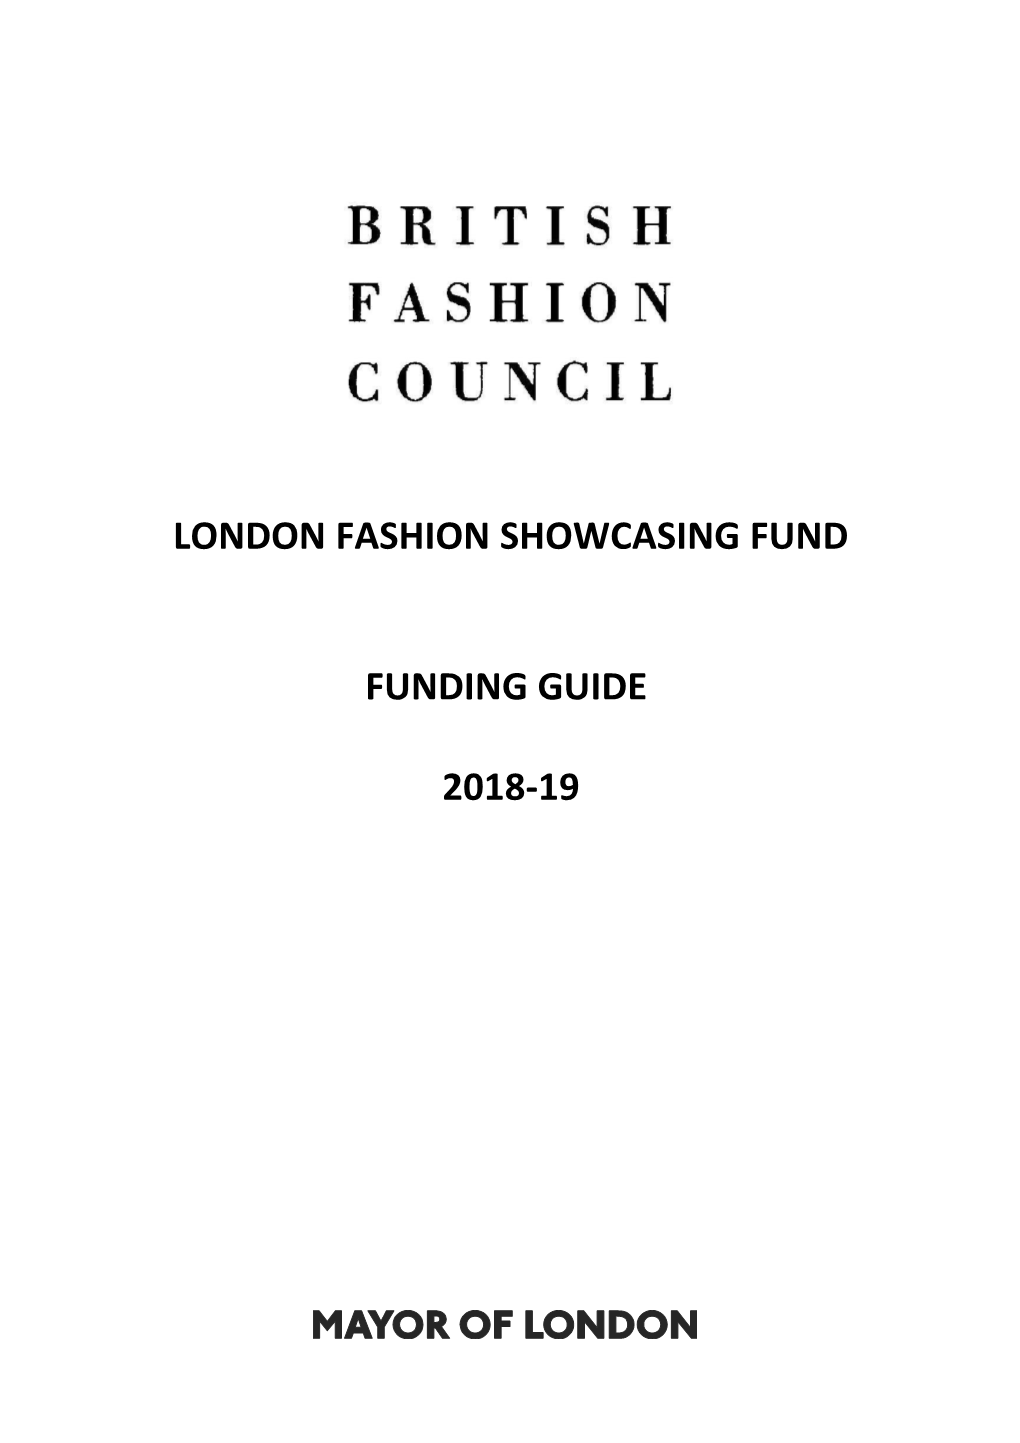 London Fashion Showcasing Fund